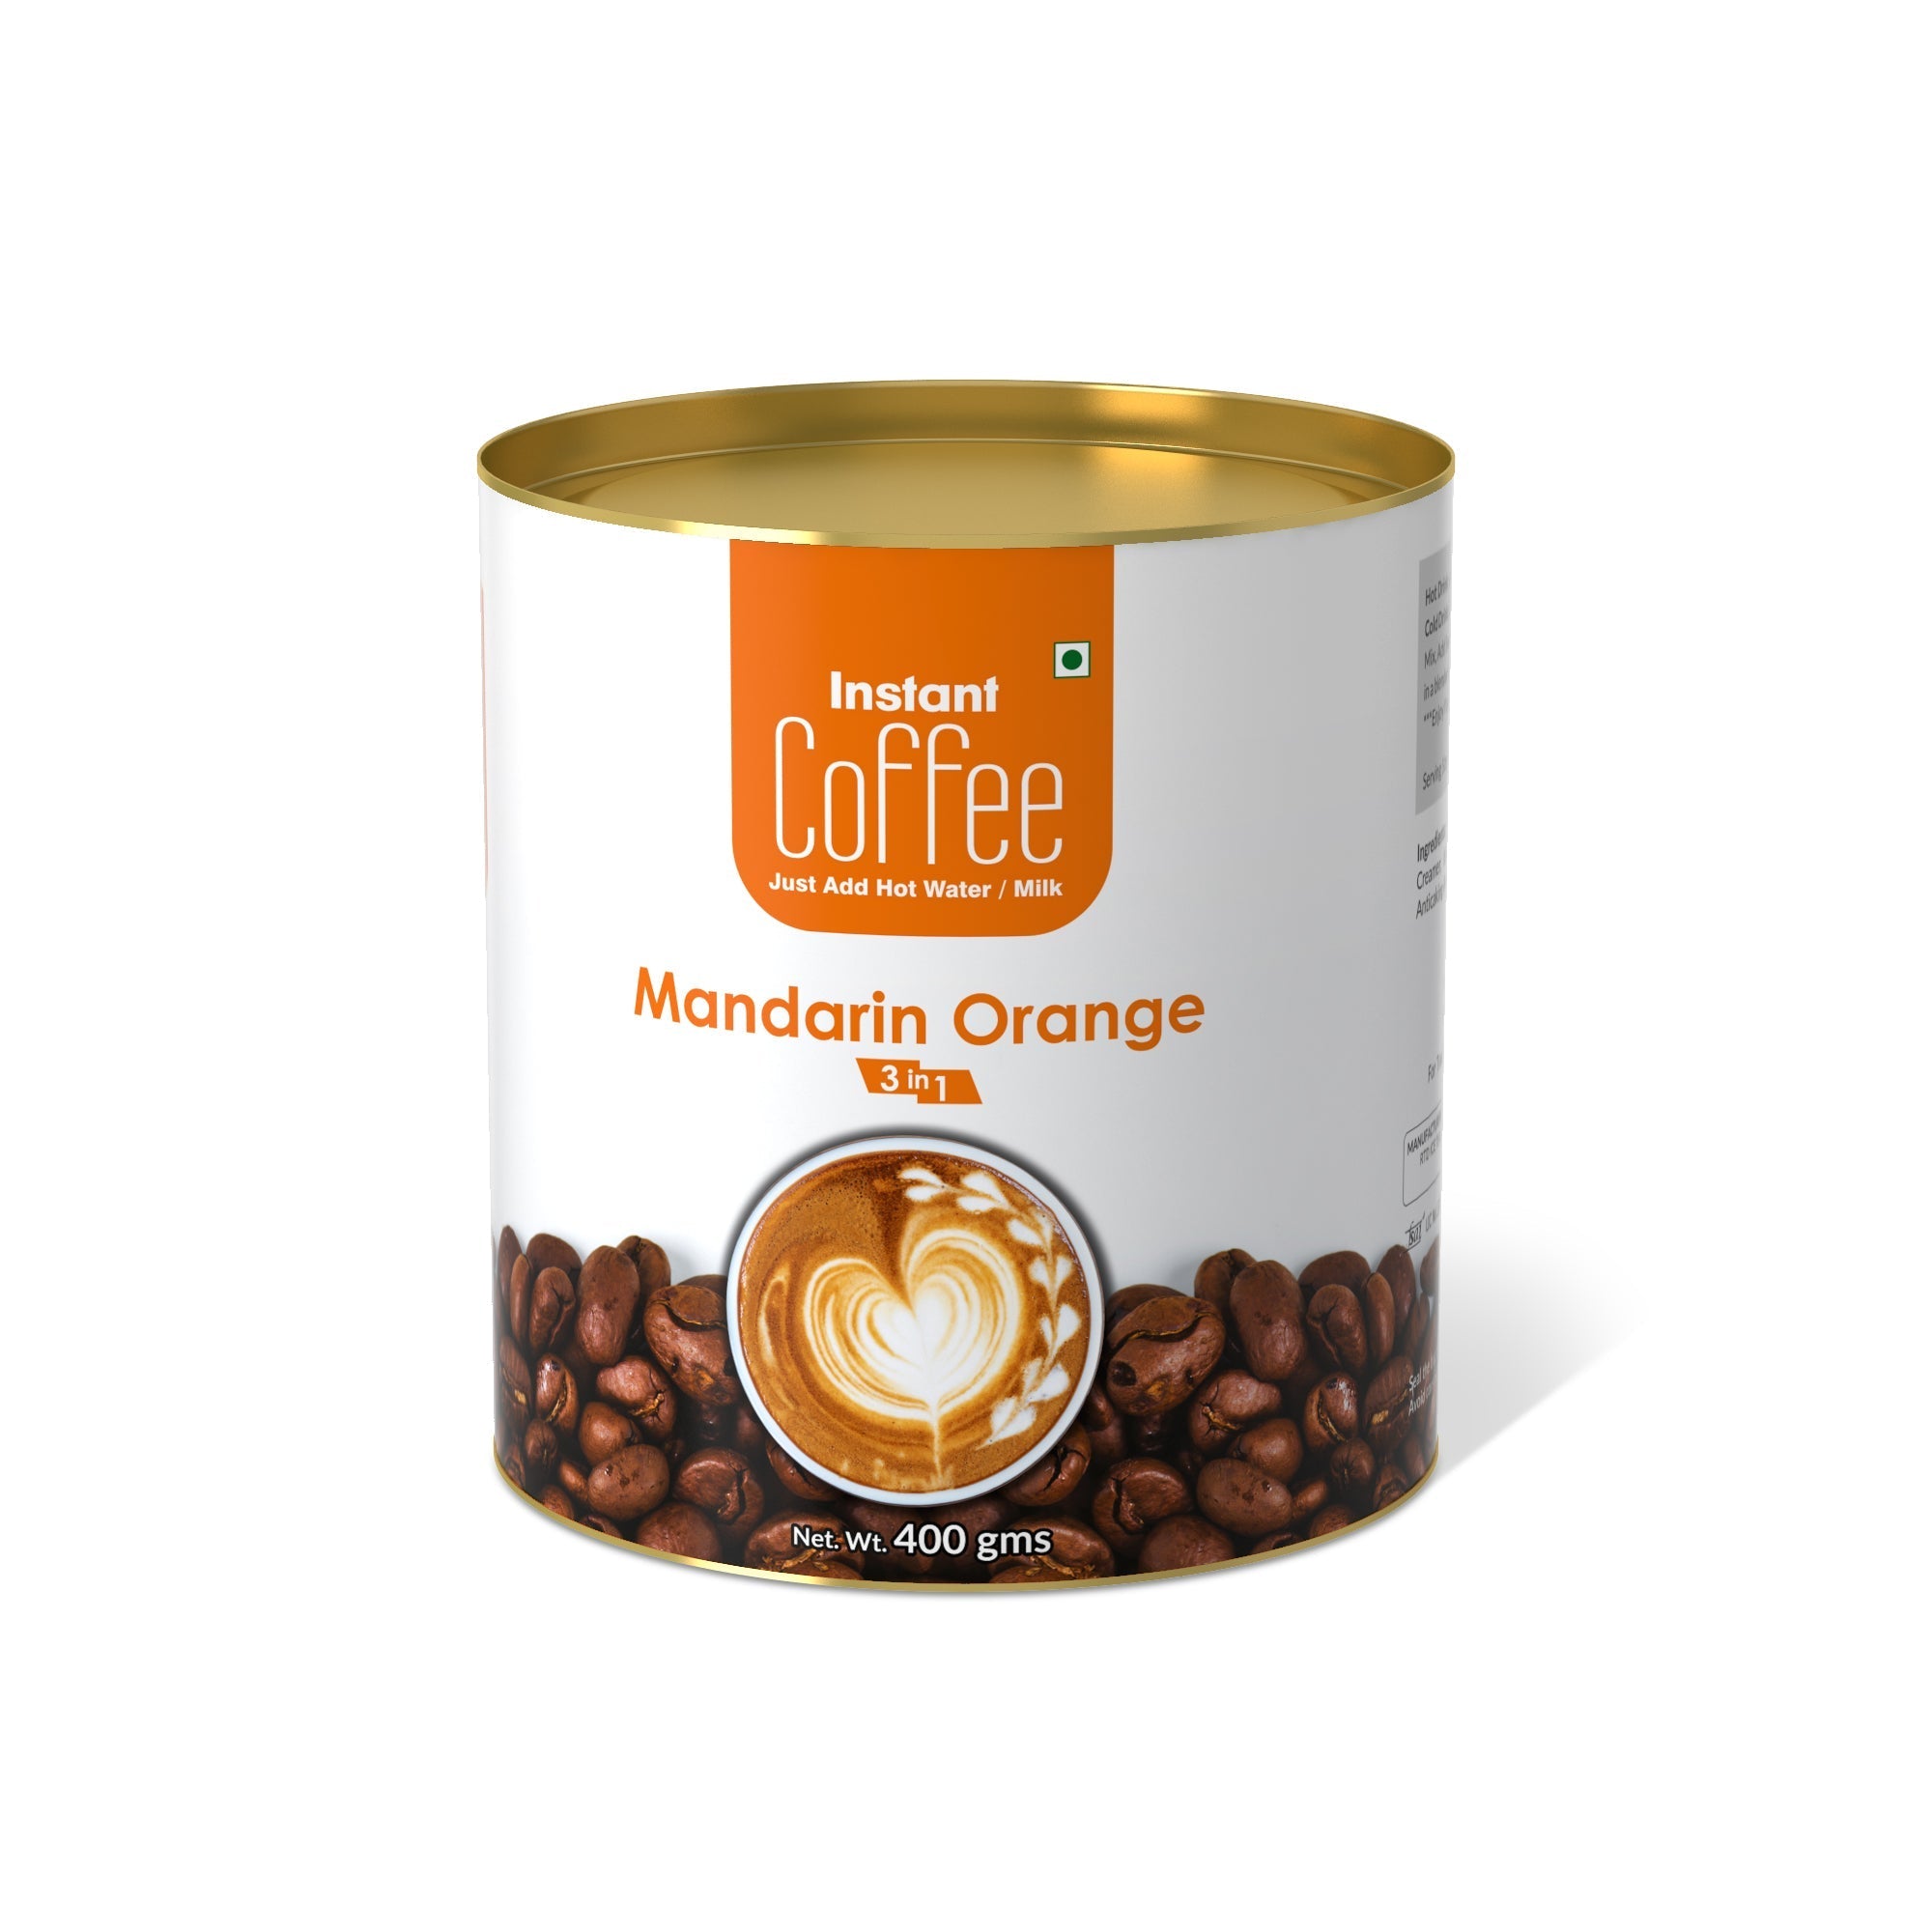 Mandarin Orange Instant Coffee Premix (3 in 1) - 400 gms